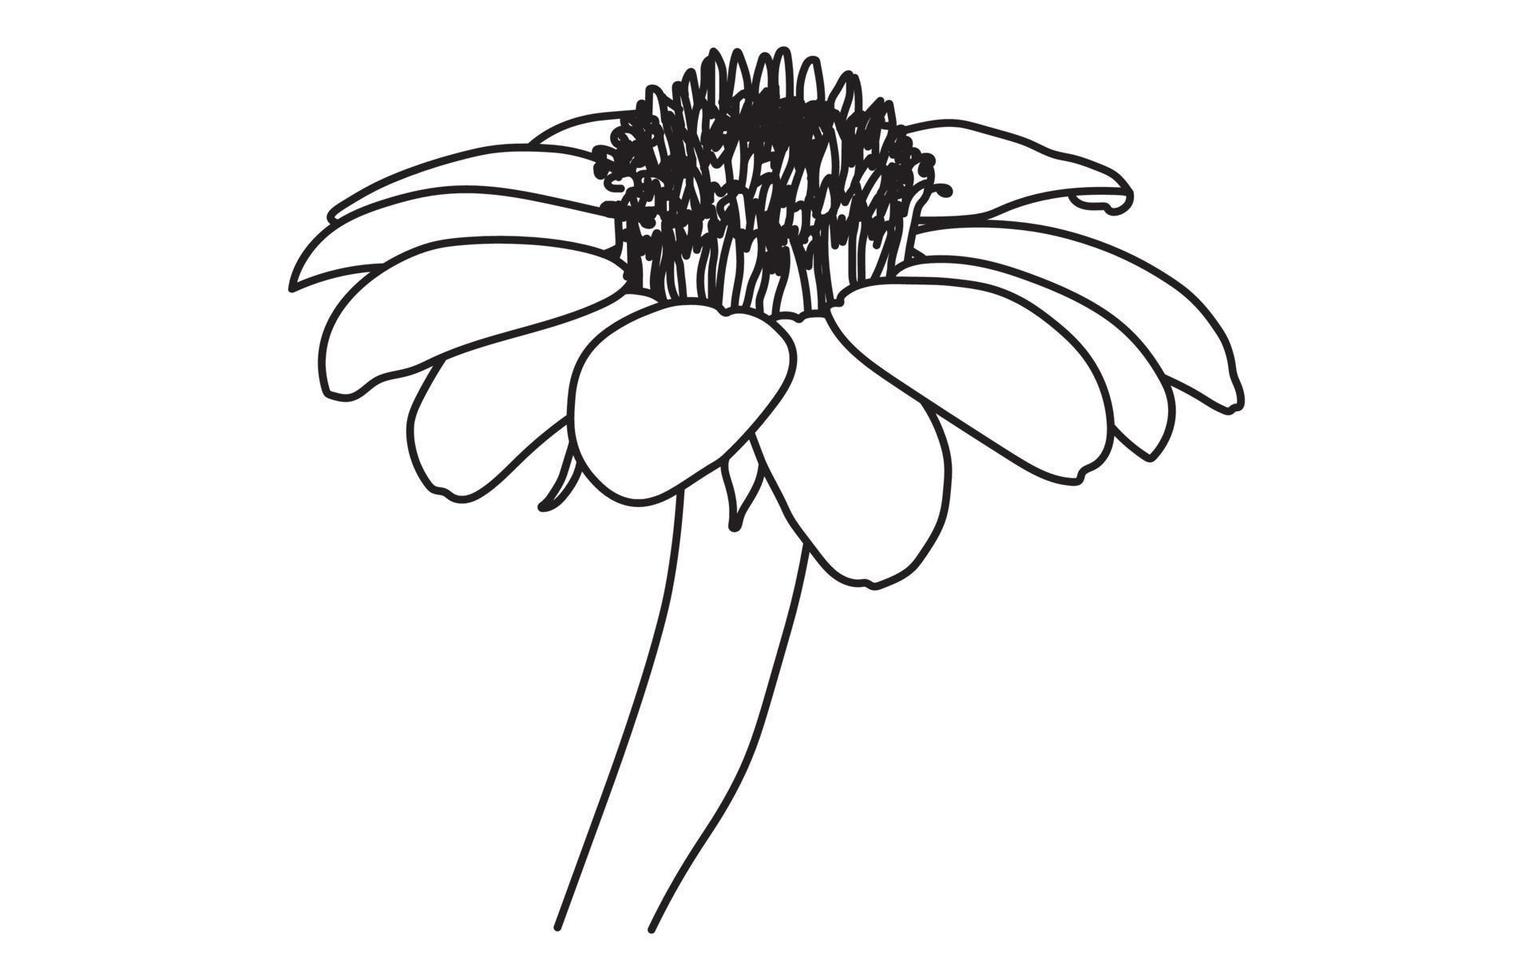 Flower vector graphic design, for prints, vector illustration